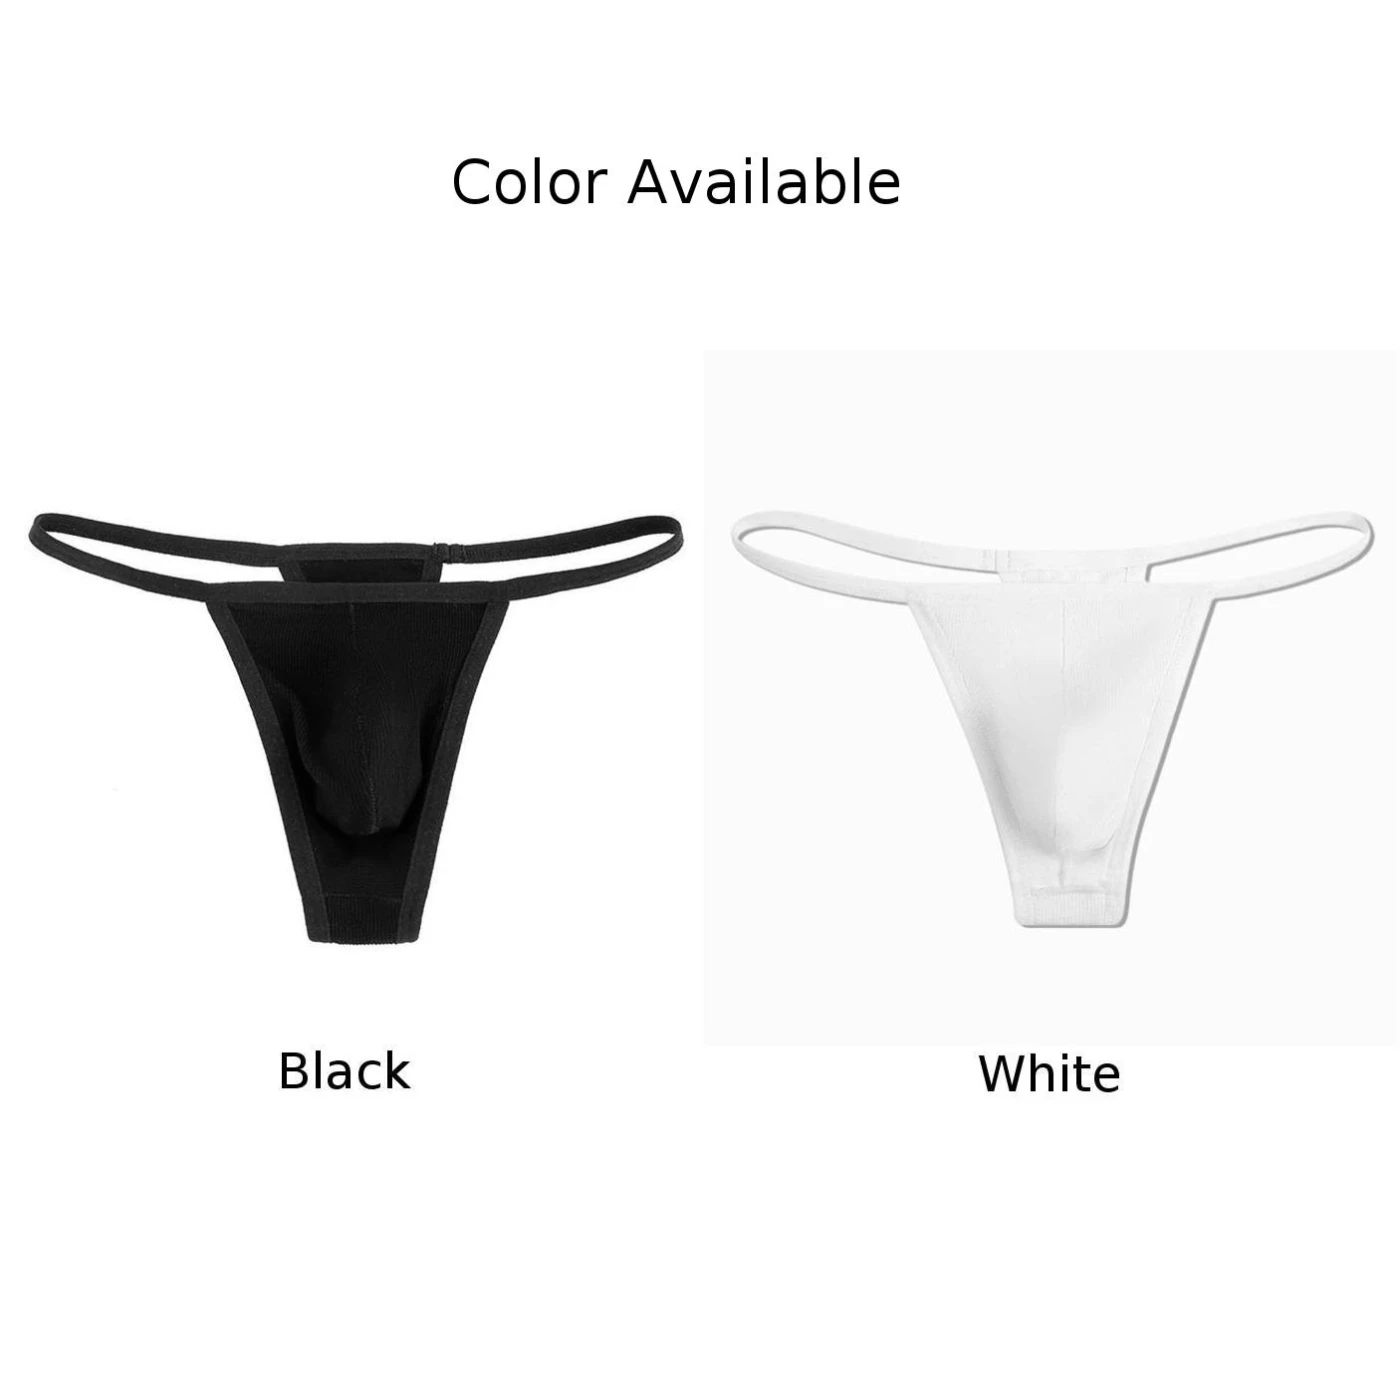 Mens Thongs Enhance T-Back G-string Jockstrap Panties Low Rise Bikini Underwear Solid Short Trunks Pouch Underpants Lingerie